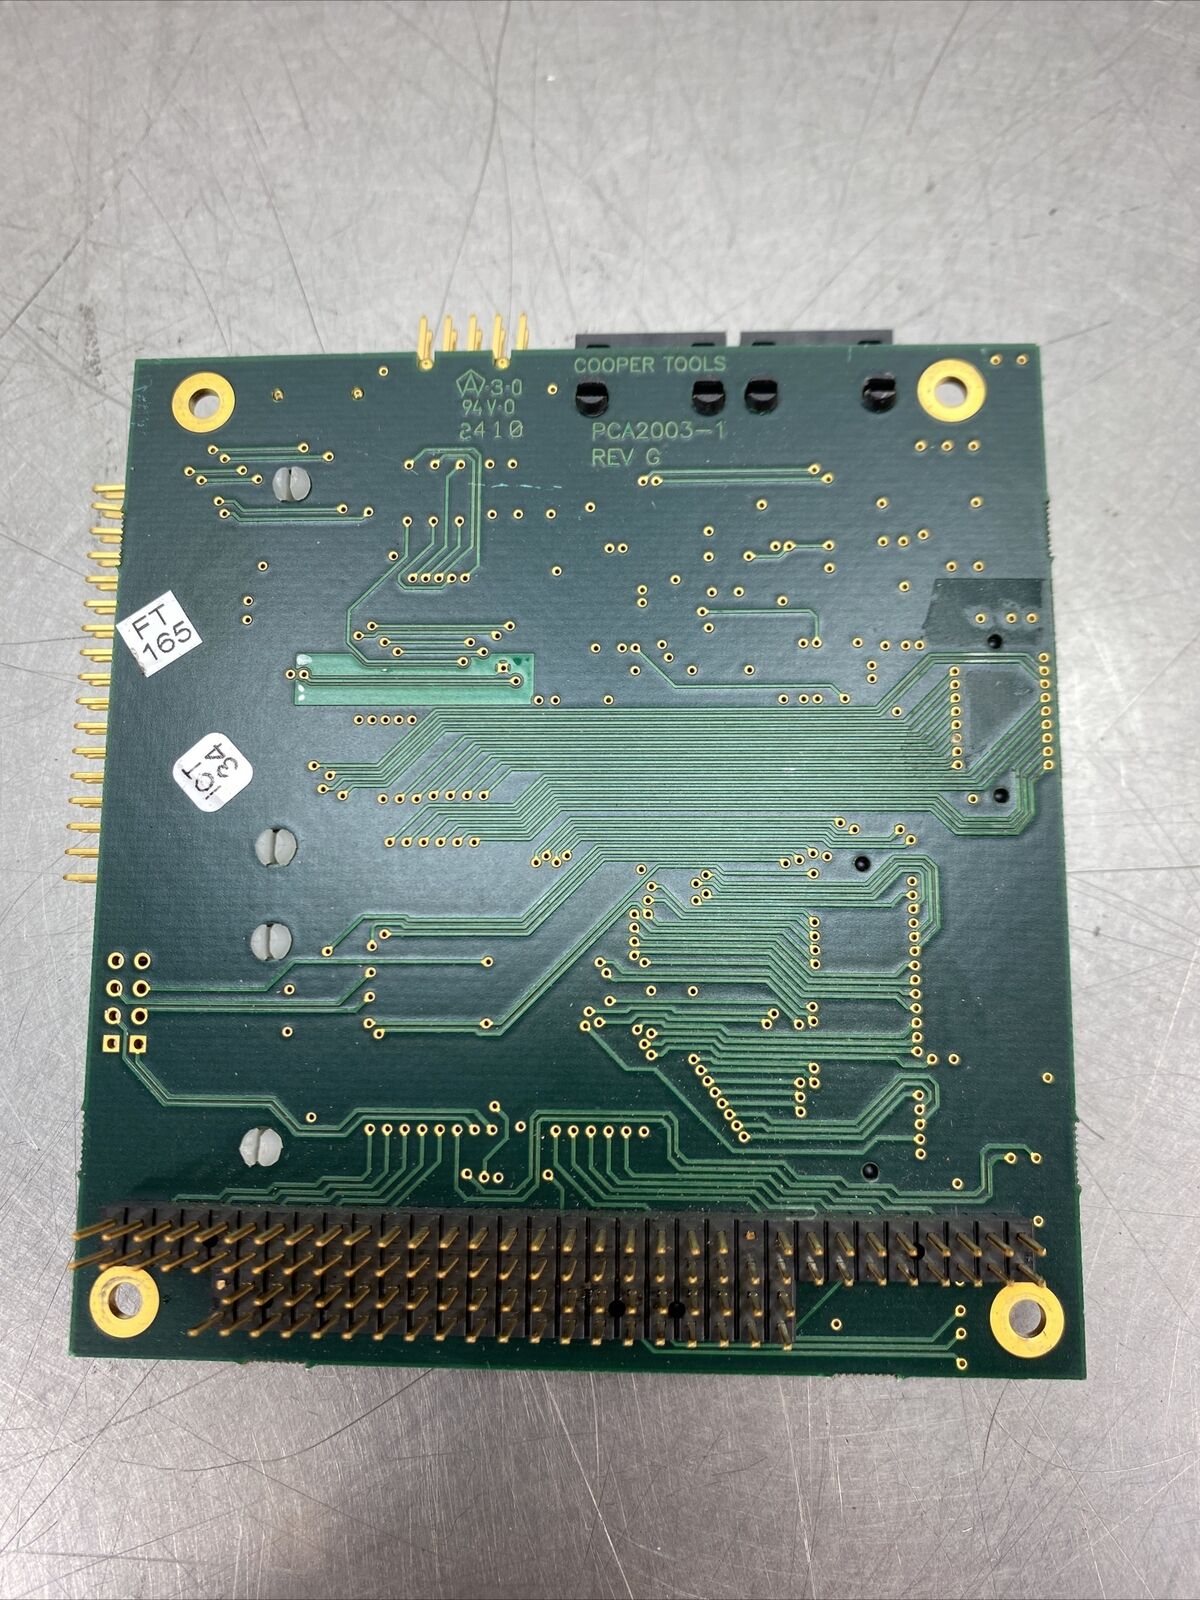 Cooper Tools PCA2003-1 Circuit Board PCA2003-1 Rev G             3E-13